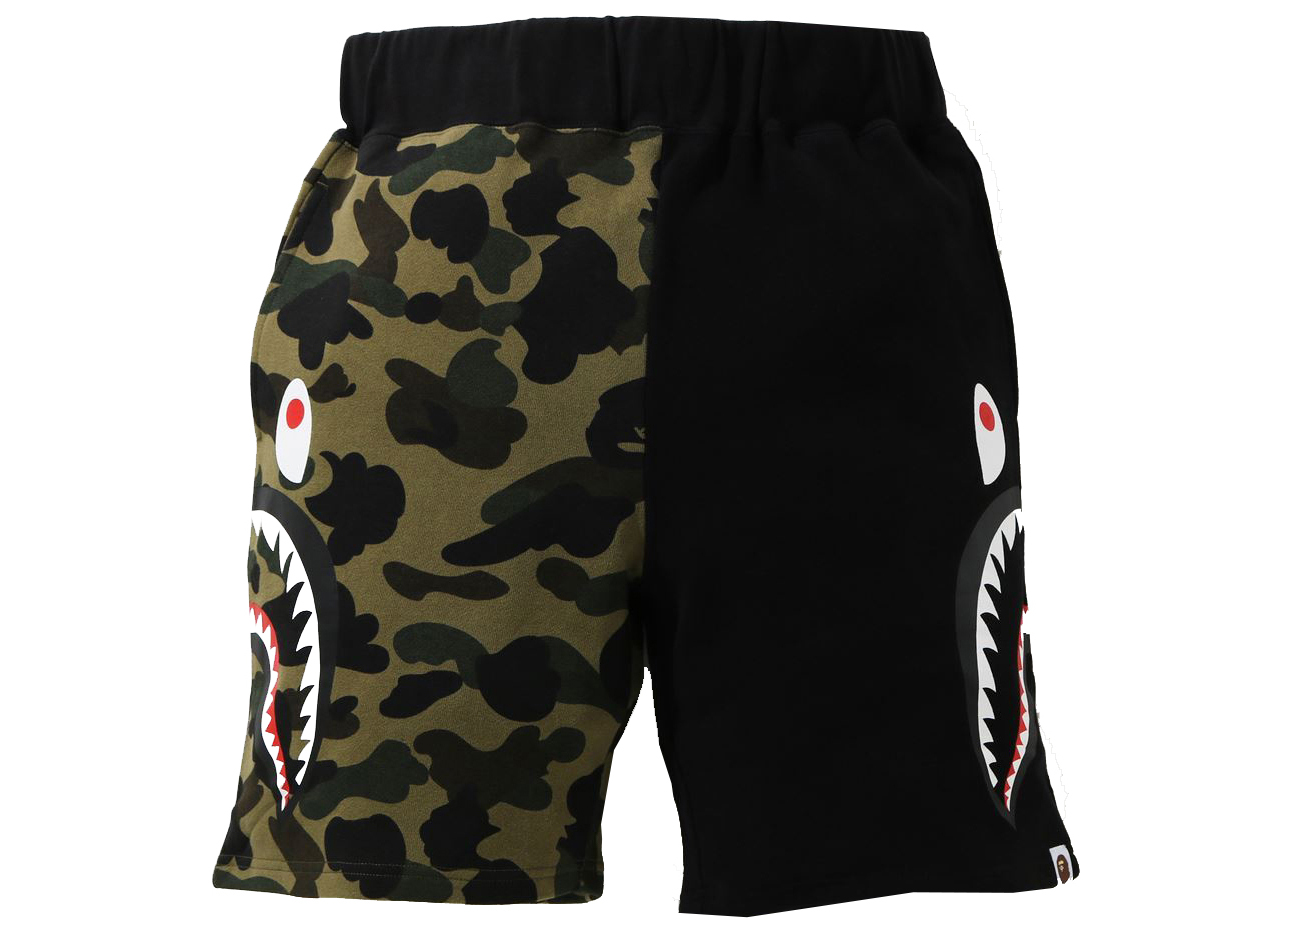 BAPE ABC Camo Side Shark Sweat Shorts Green/Navy